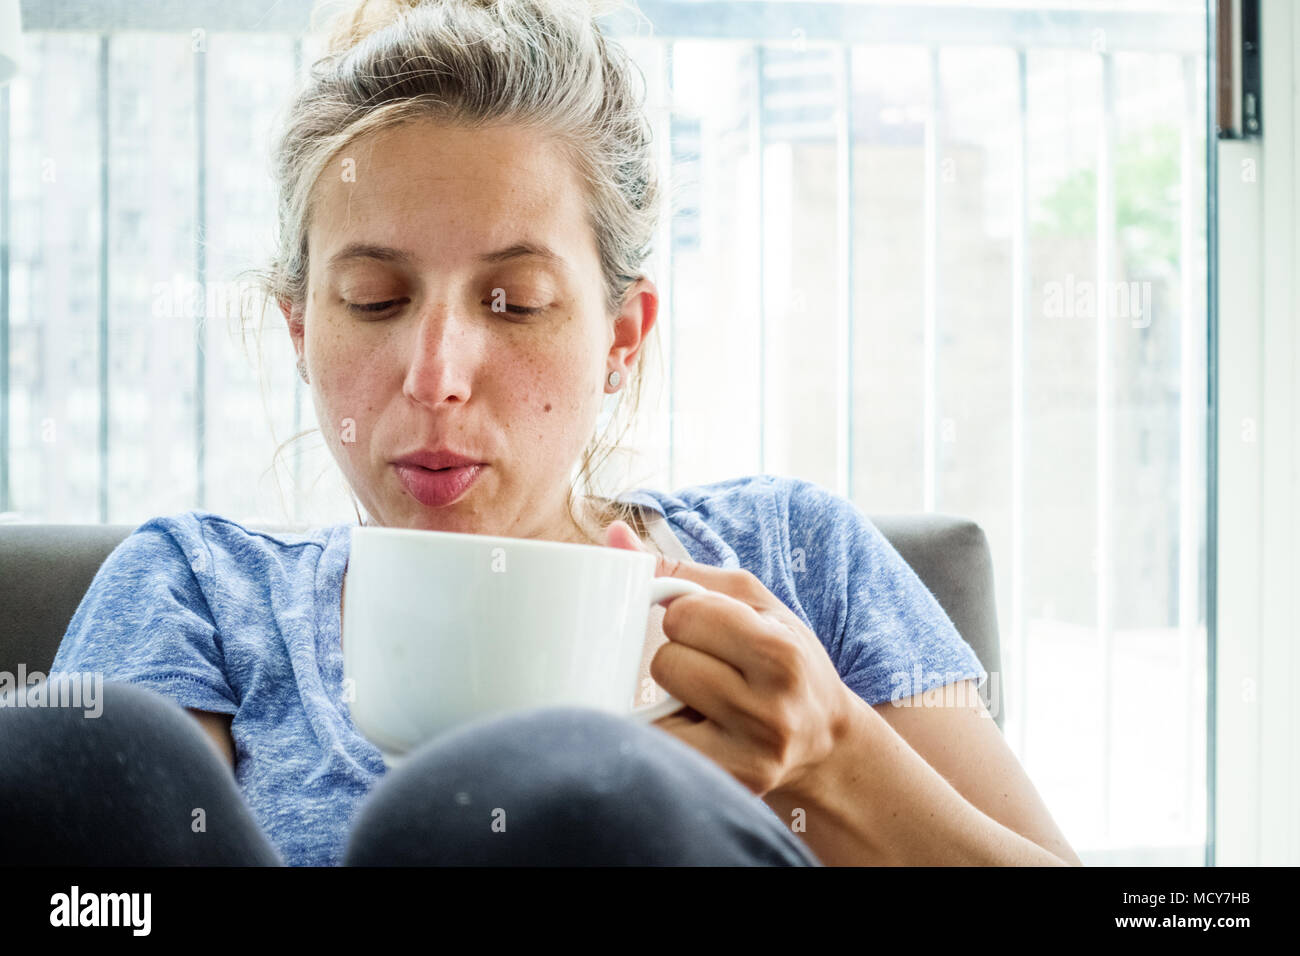 Woman holding coffee mug Stock Photo